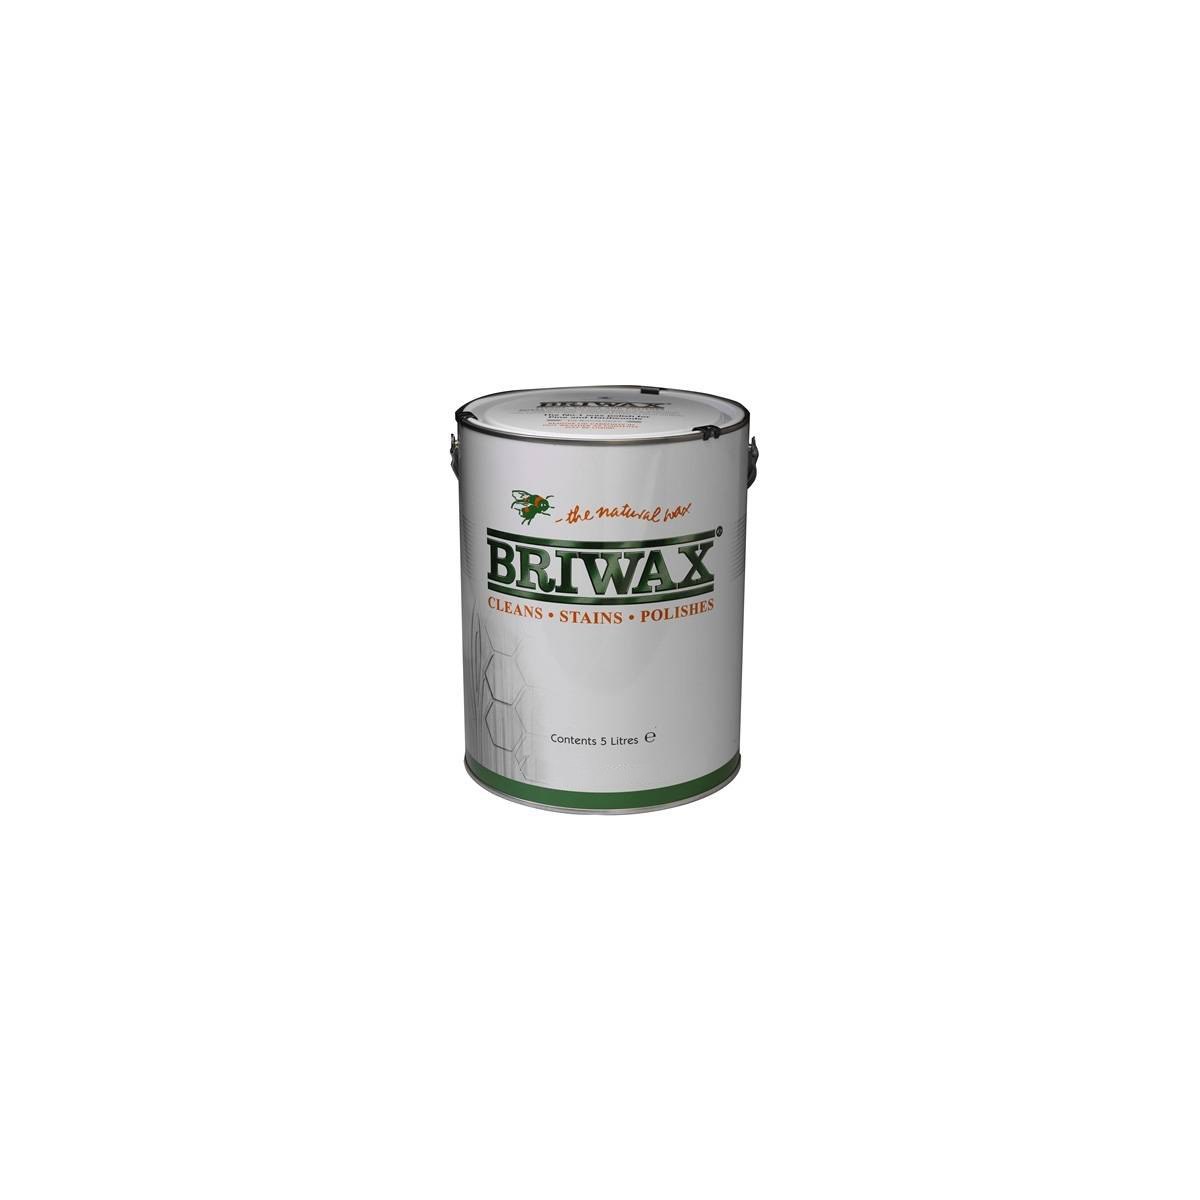 Briwax Original Wax Polish Old Pine 5 Litre